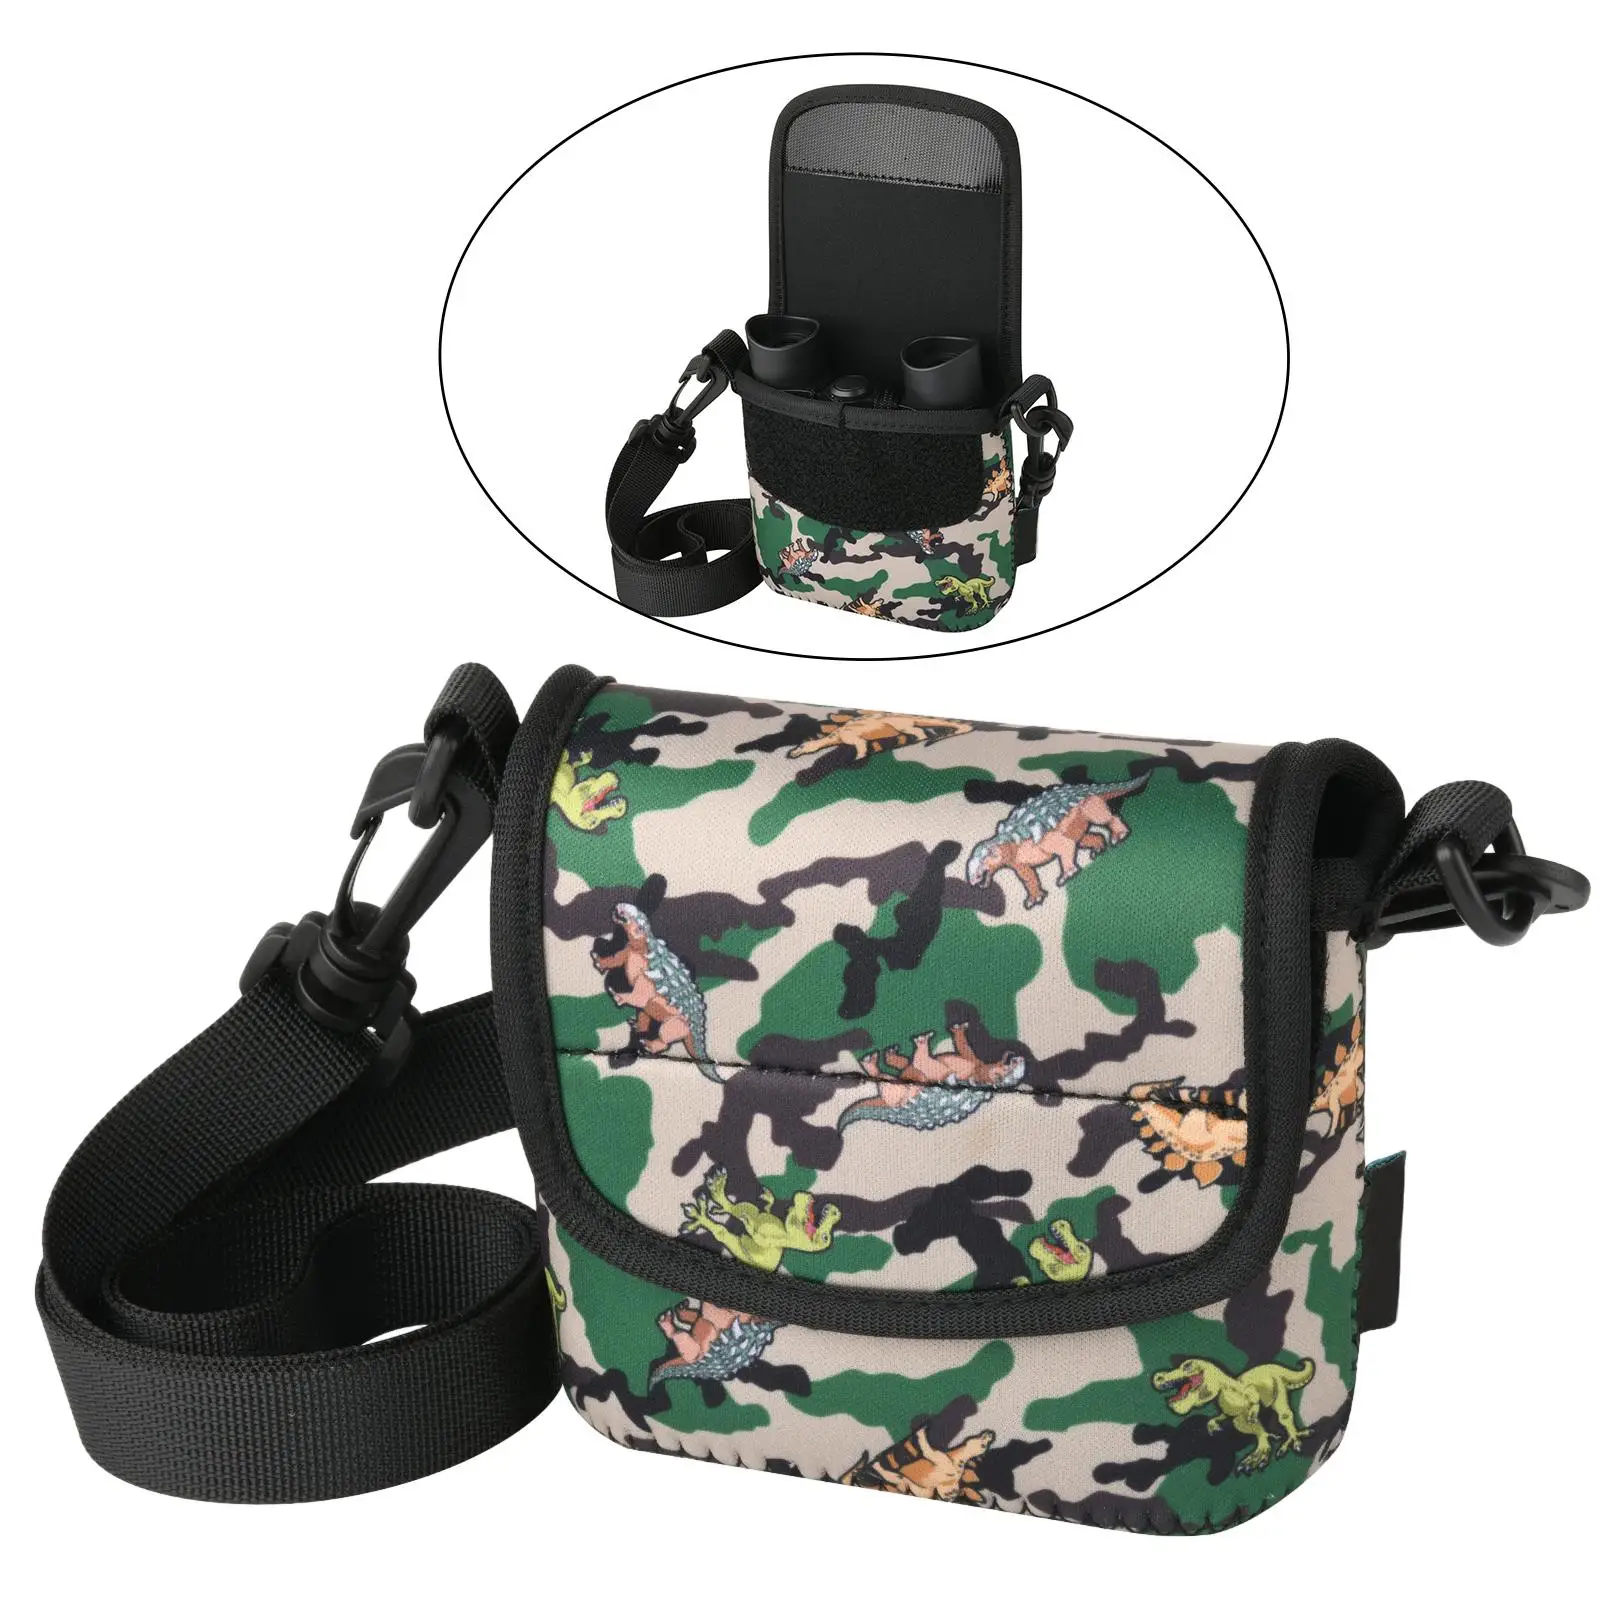 Kids Binoculars Carry Bag Durable Portable for Eyepiece Cameras Organizer